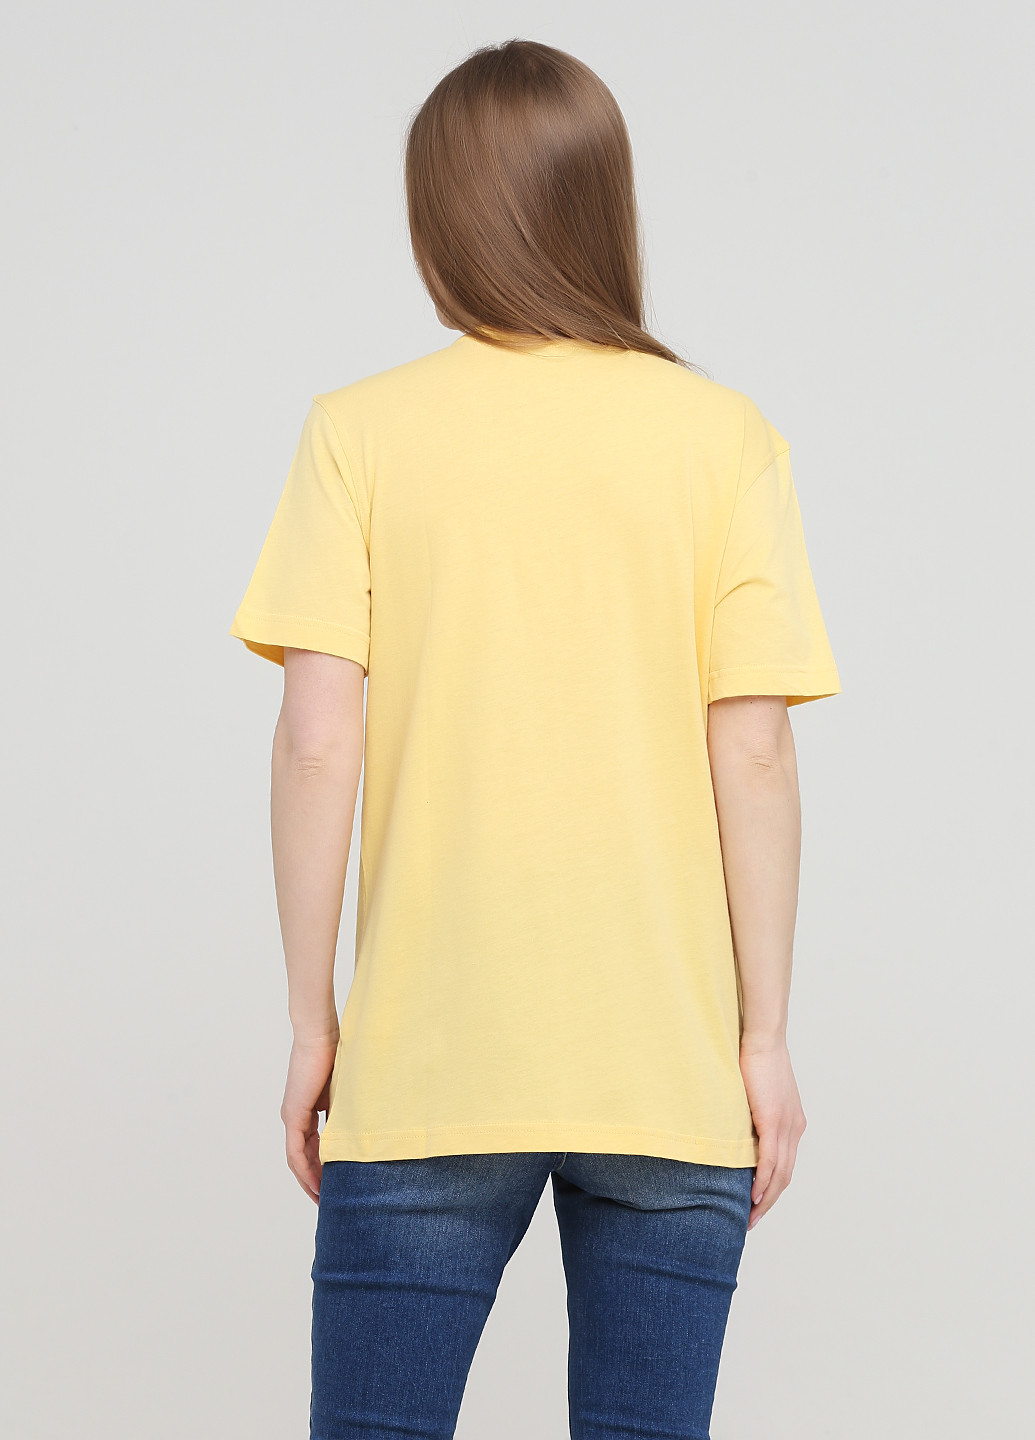 Желтая летняя футболка United Colors of Benetton